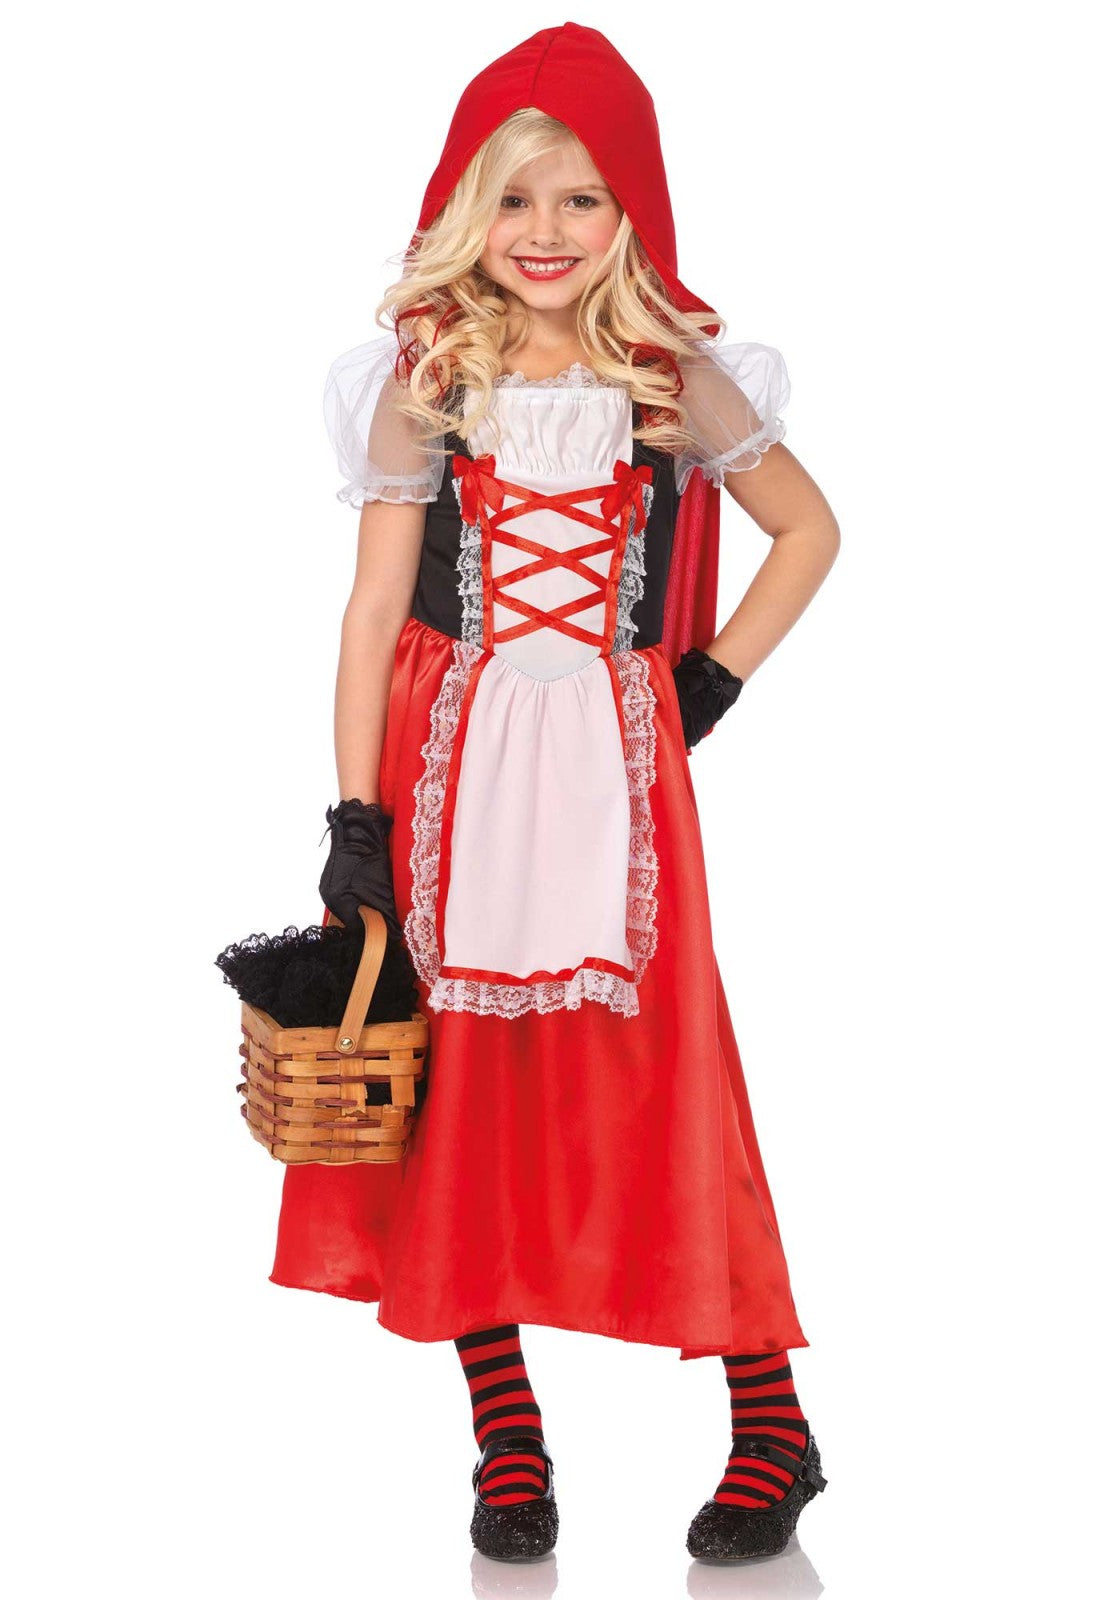 Little Red Riding Hood costume for children